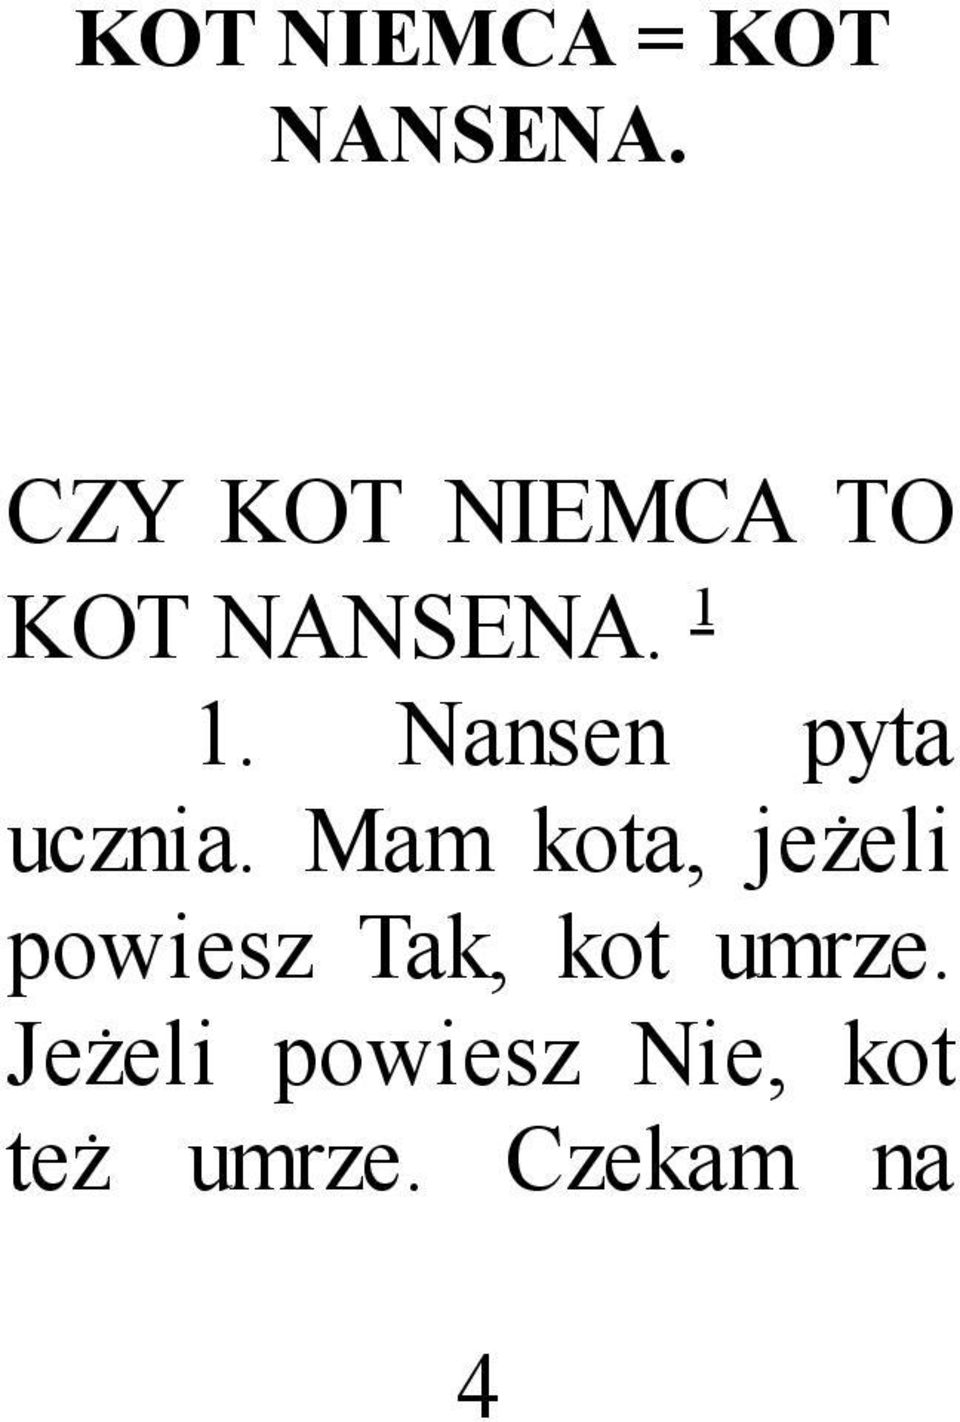 Nansen pyta ucznia.